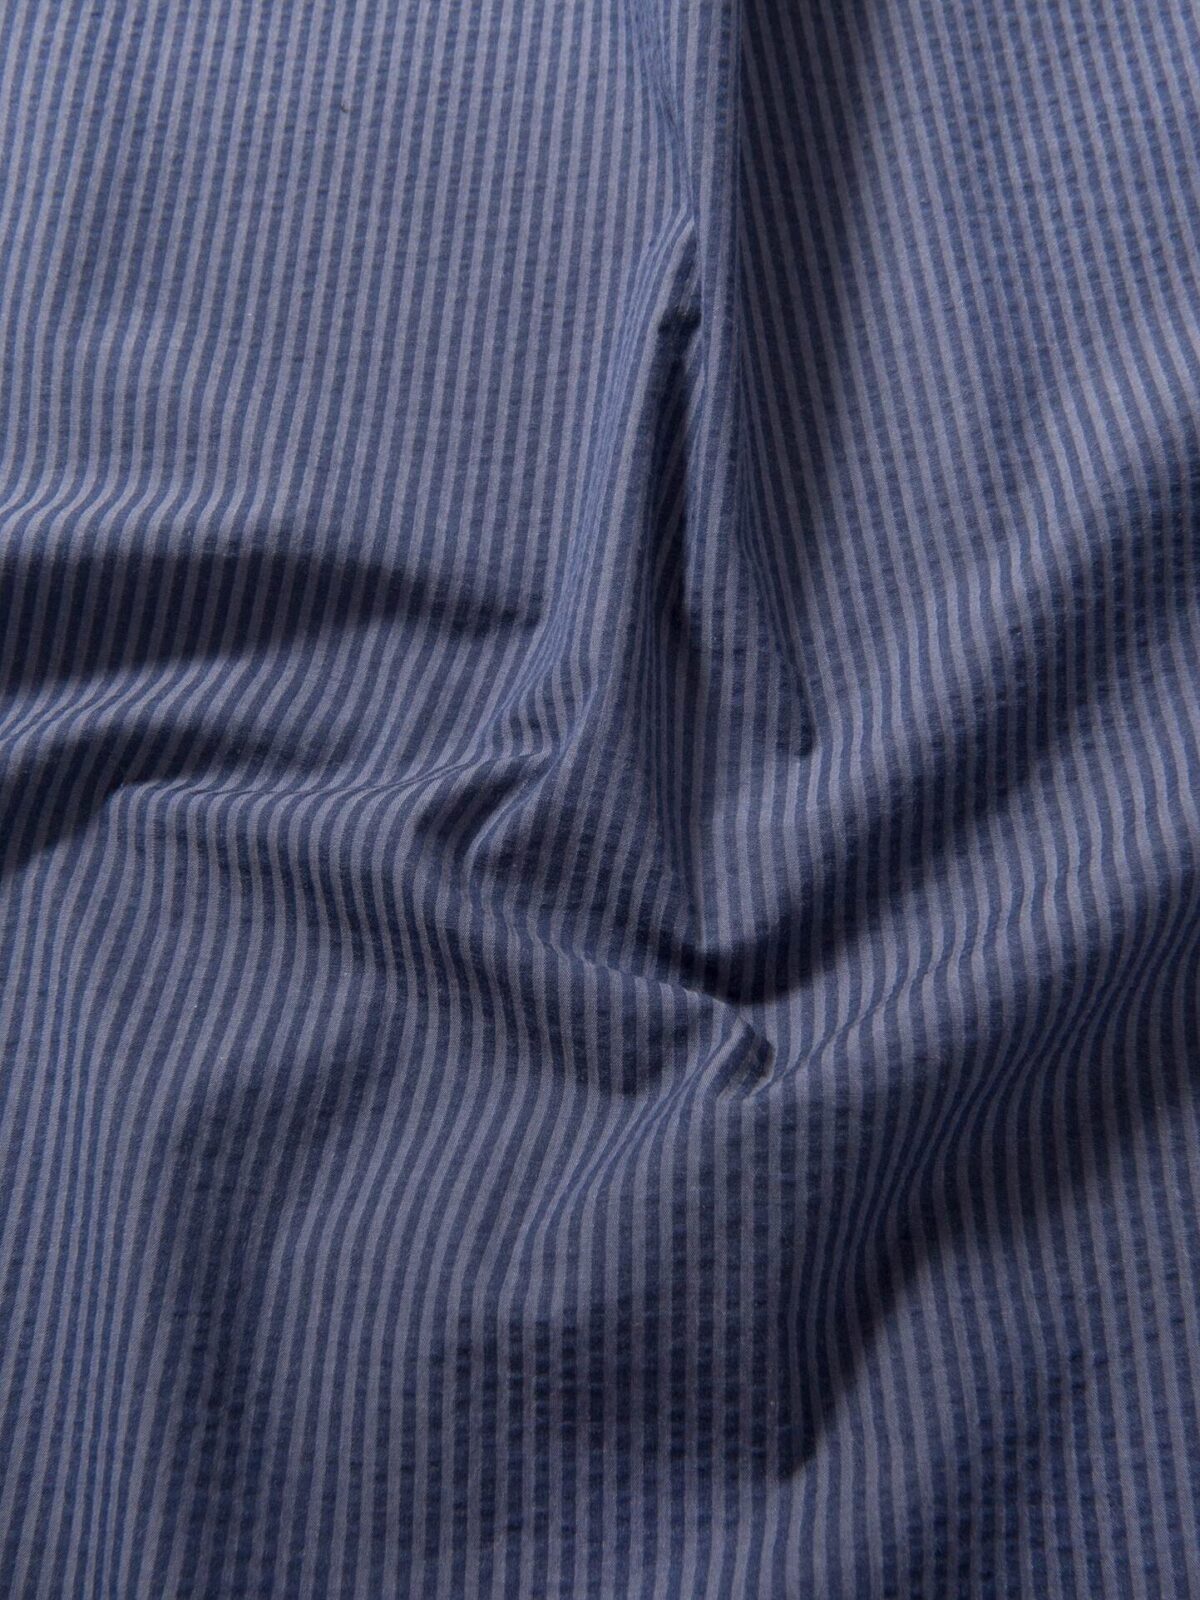 Portuguese Slate Blue Seersucker Shirts by Proper Cloth